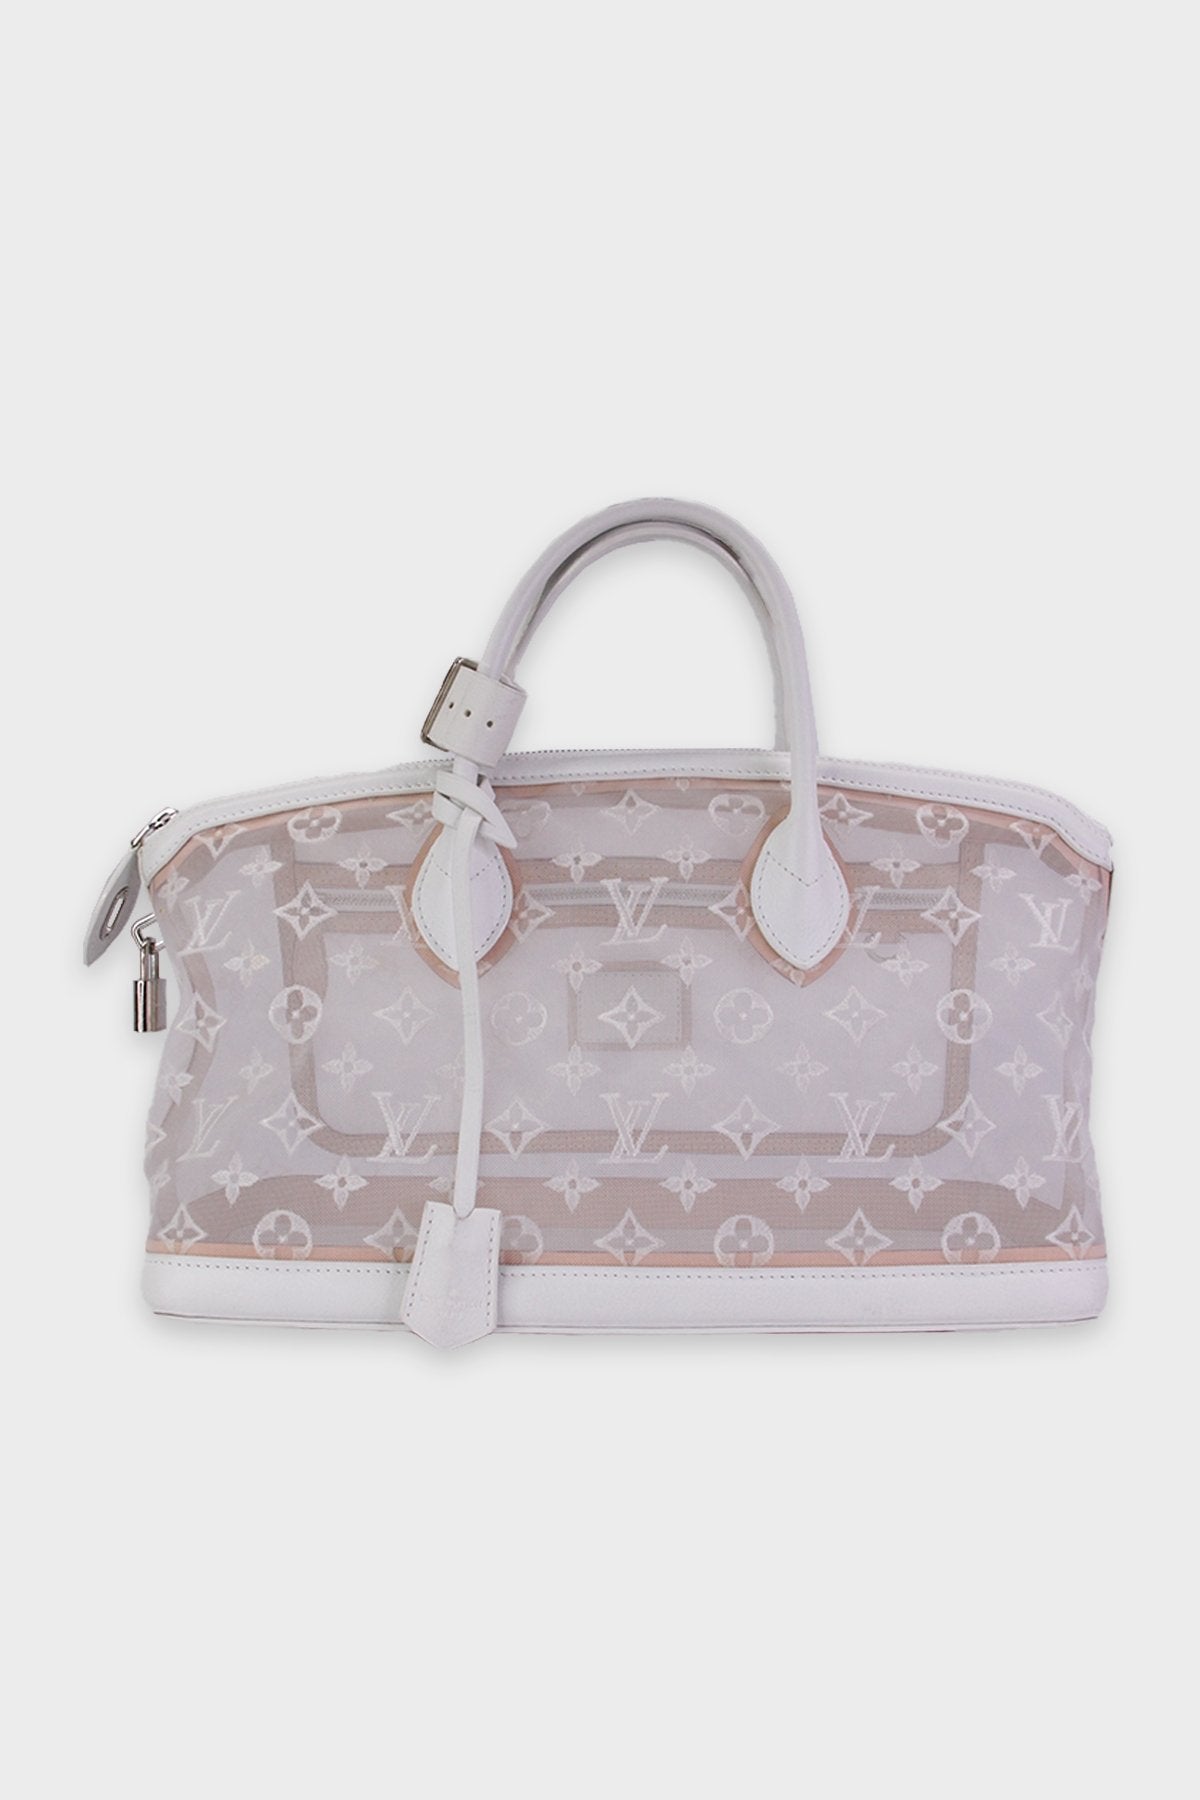 Louis Vuitton Sheer White Monogram Top Handle Handbag - shop-olivia.com